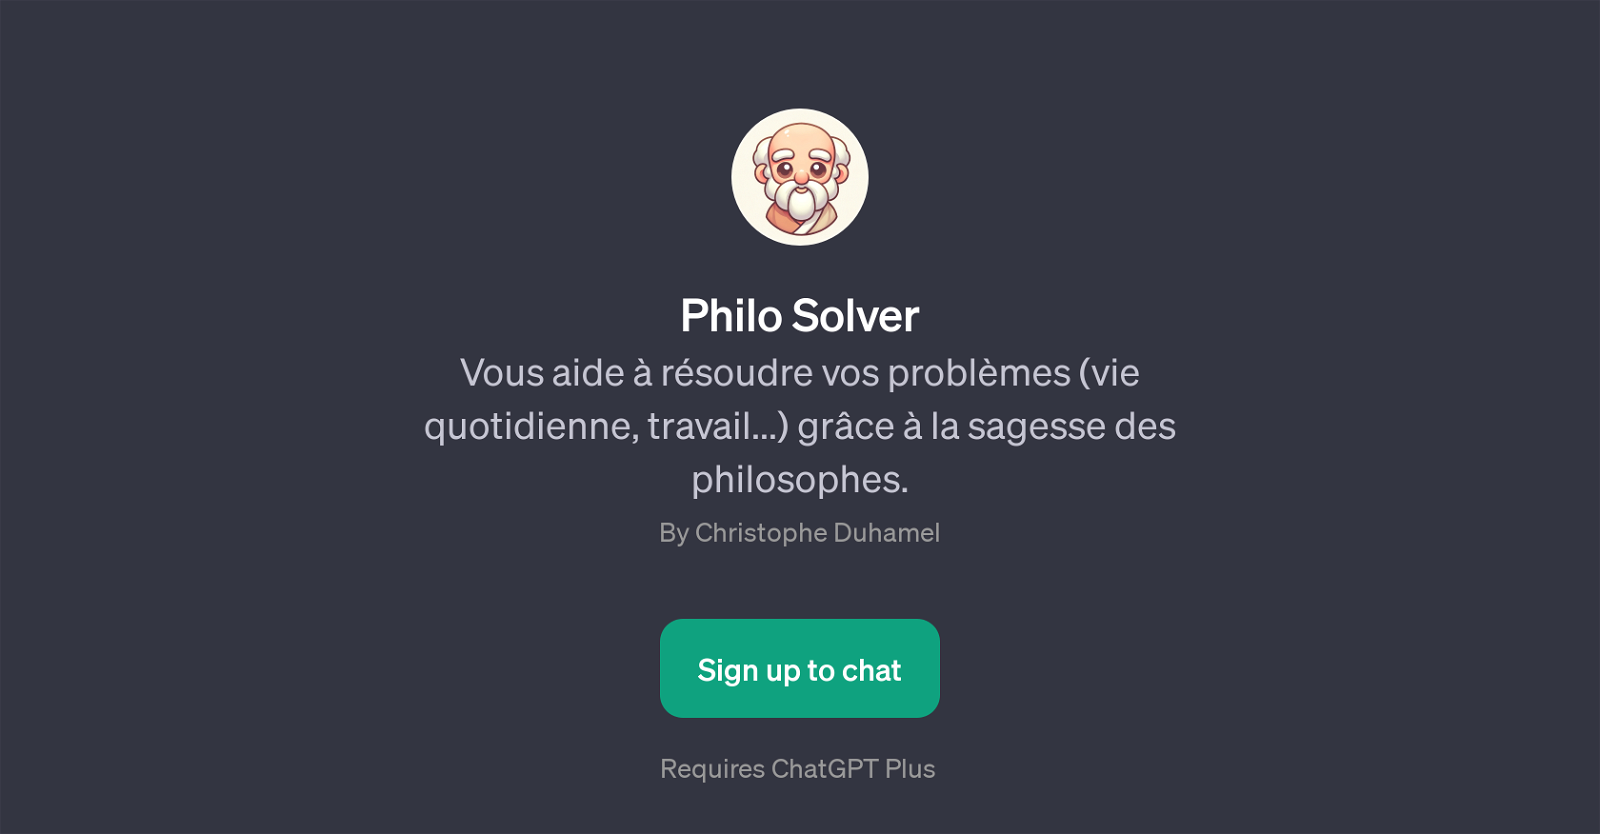 Philo Solver website